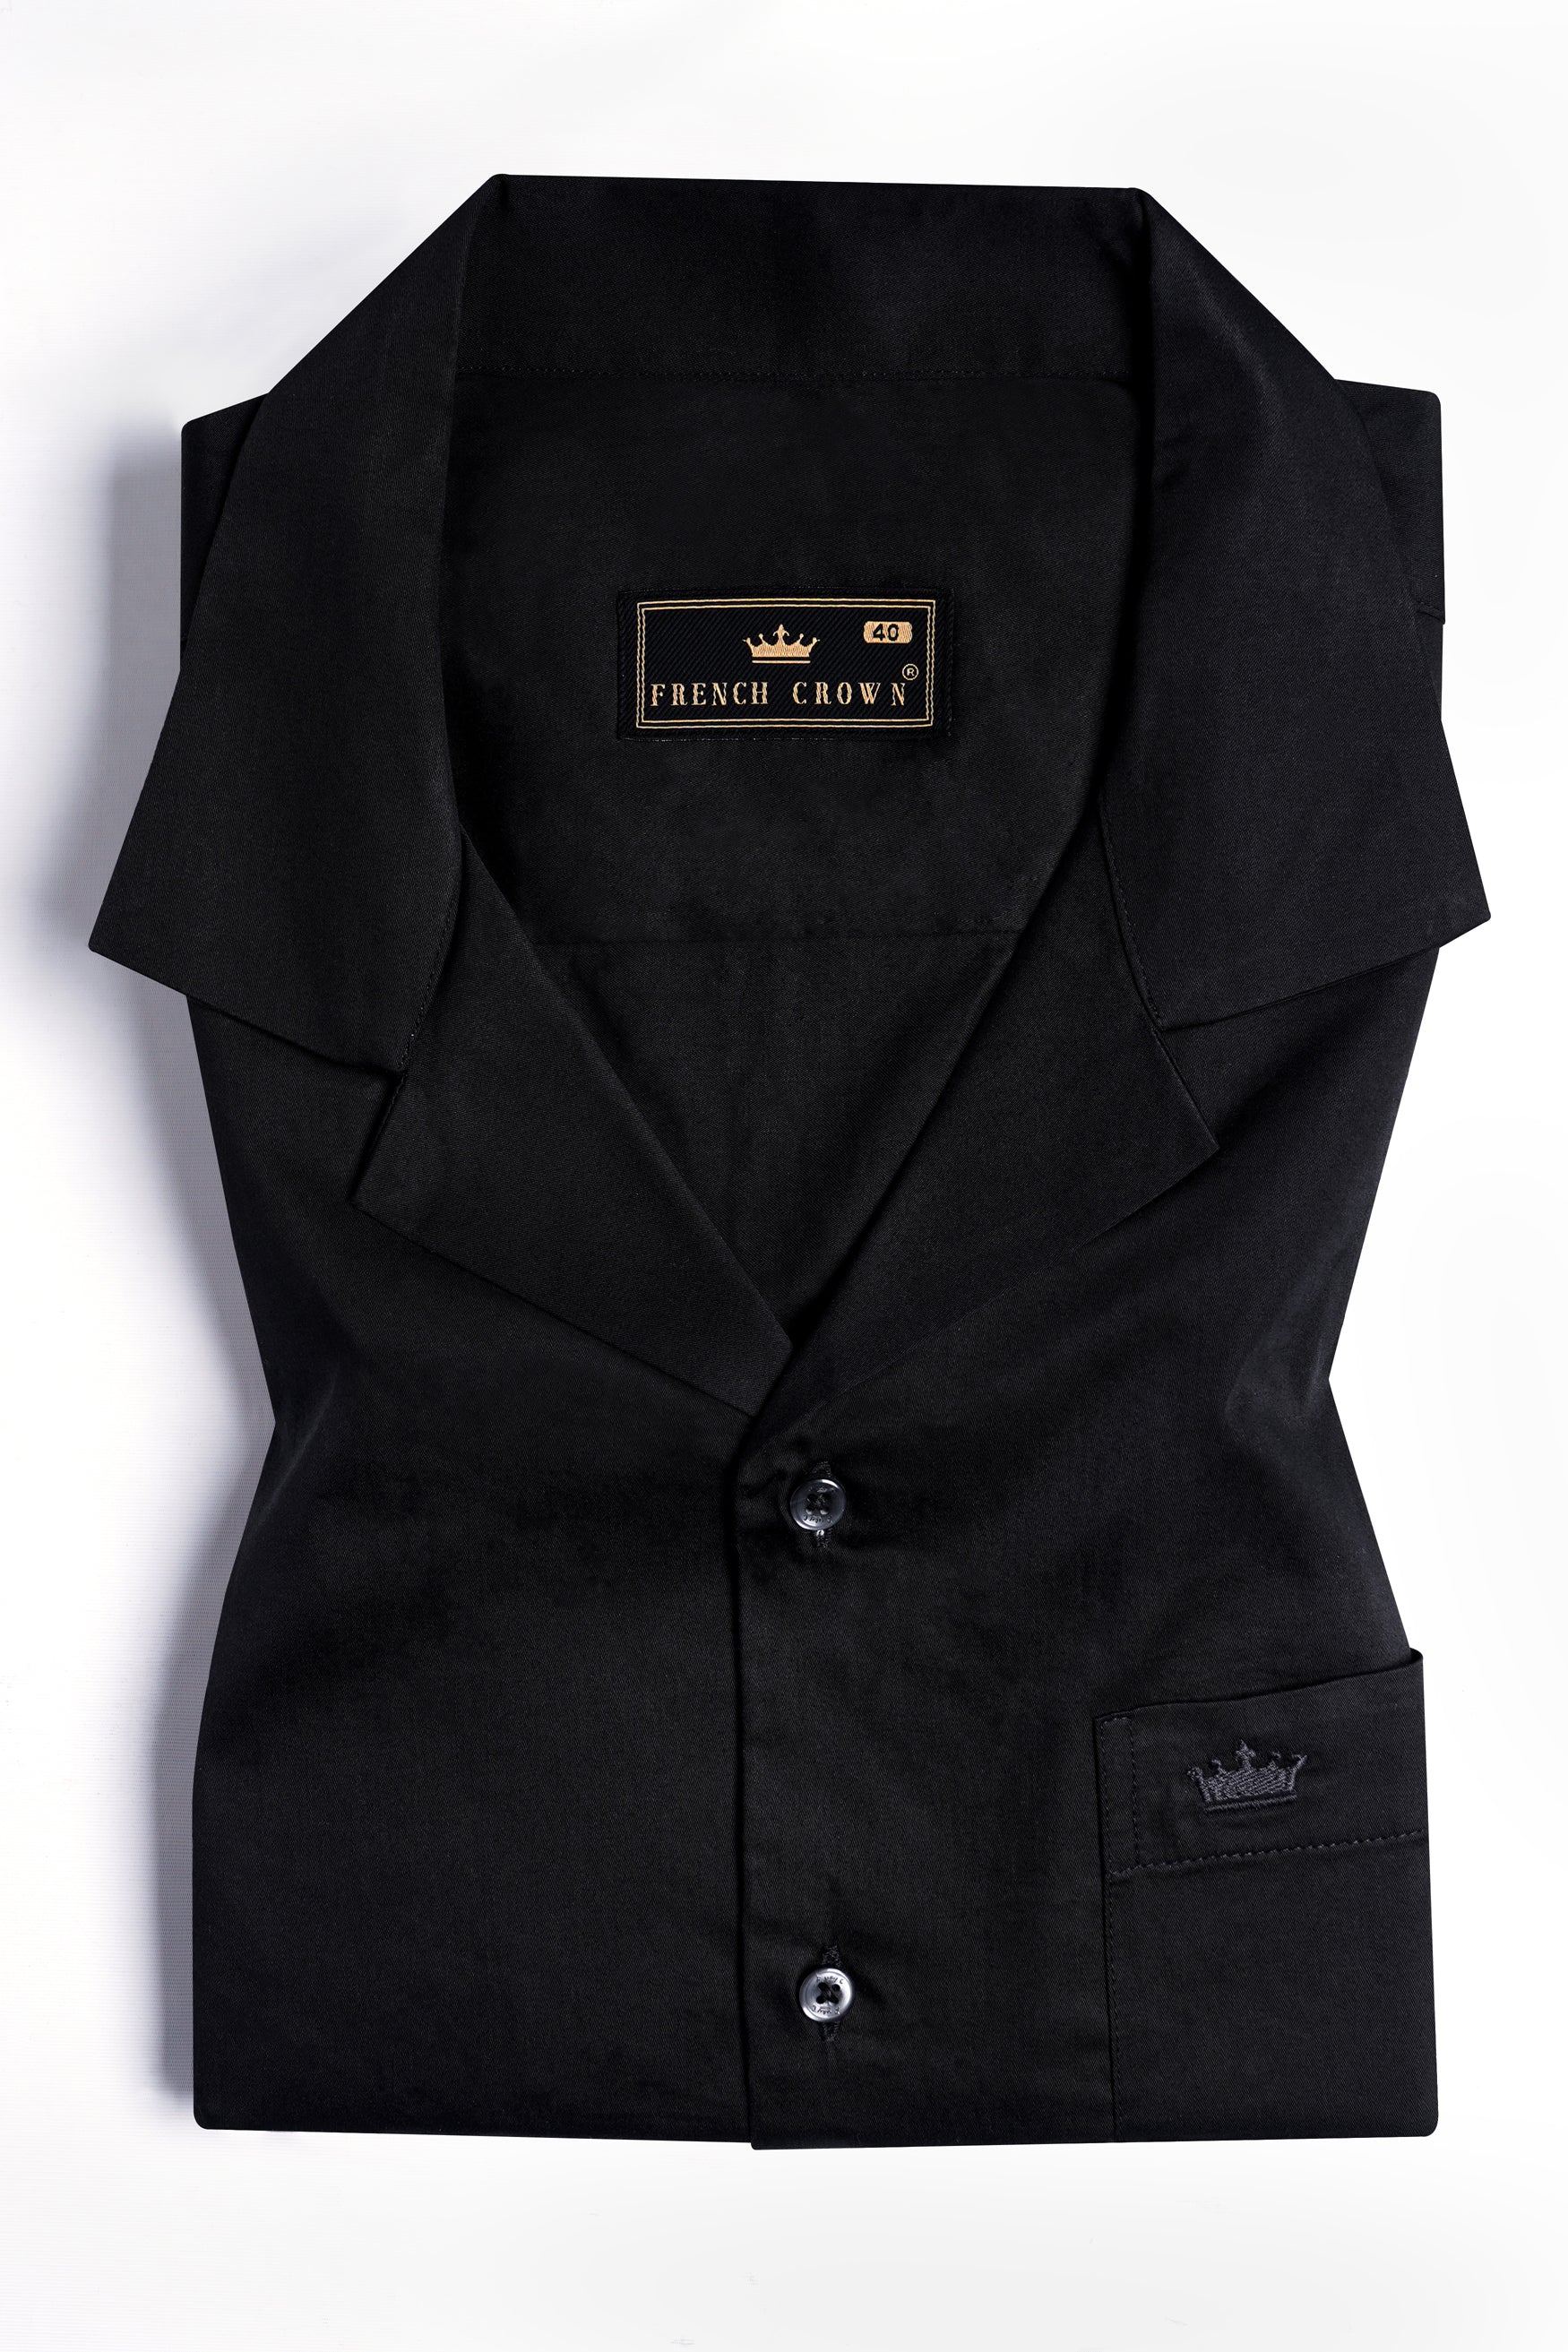 Jade Black Premium Cotton Half Sleeved Shirt 11995-CC-SS-BLK-38, 11995-CC-SS-BLK-39, 11995-CC-SS-BLK-40, 11995-CC-SS-BLK-42, 11995-CC-SS-BLK-44, 11995-CC-SS-BLK-46, 11995-CC-SS-BLK-48, 11995-CC-SS-BLK-50, 11995-CC-SS-BLK-52